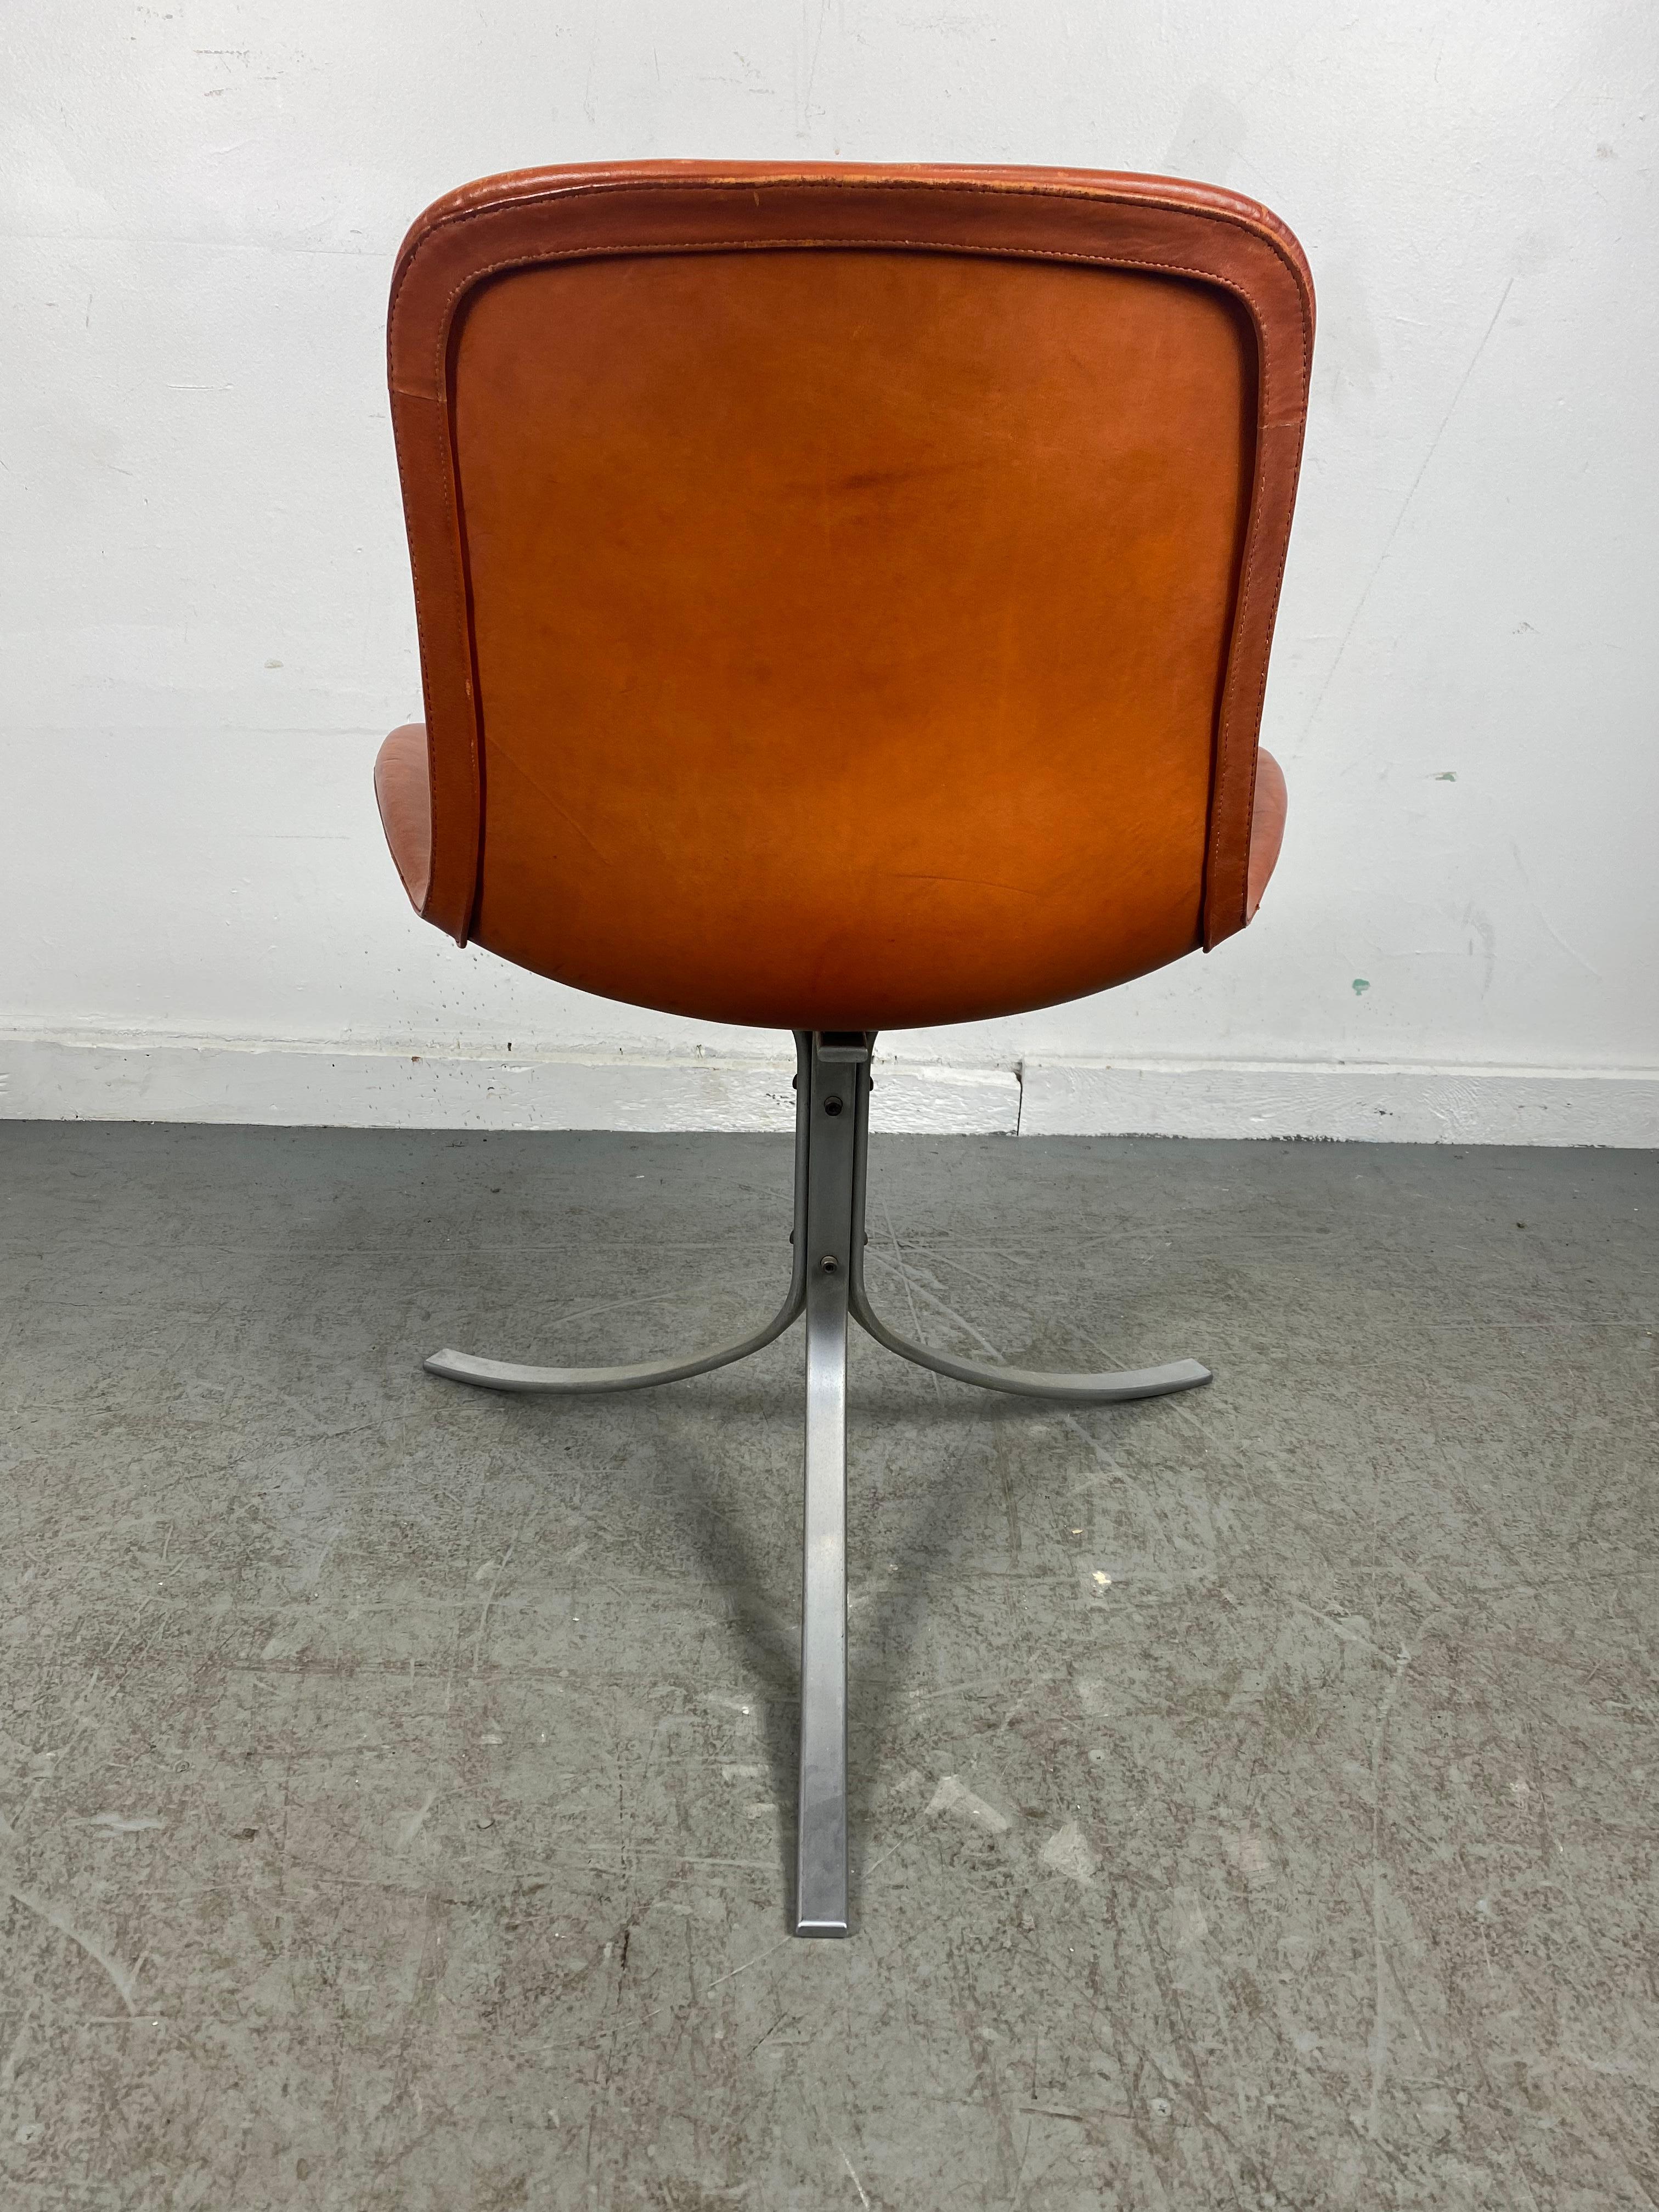 Mid-20th Century Early PK9 Chair in Leather by Poul Kjaerholm for E. Kold Christensen / Denmark